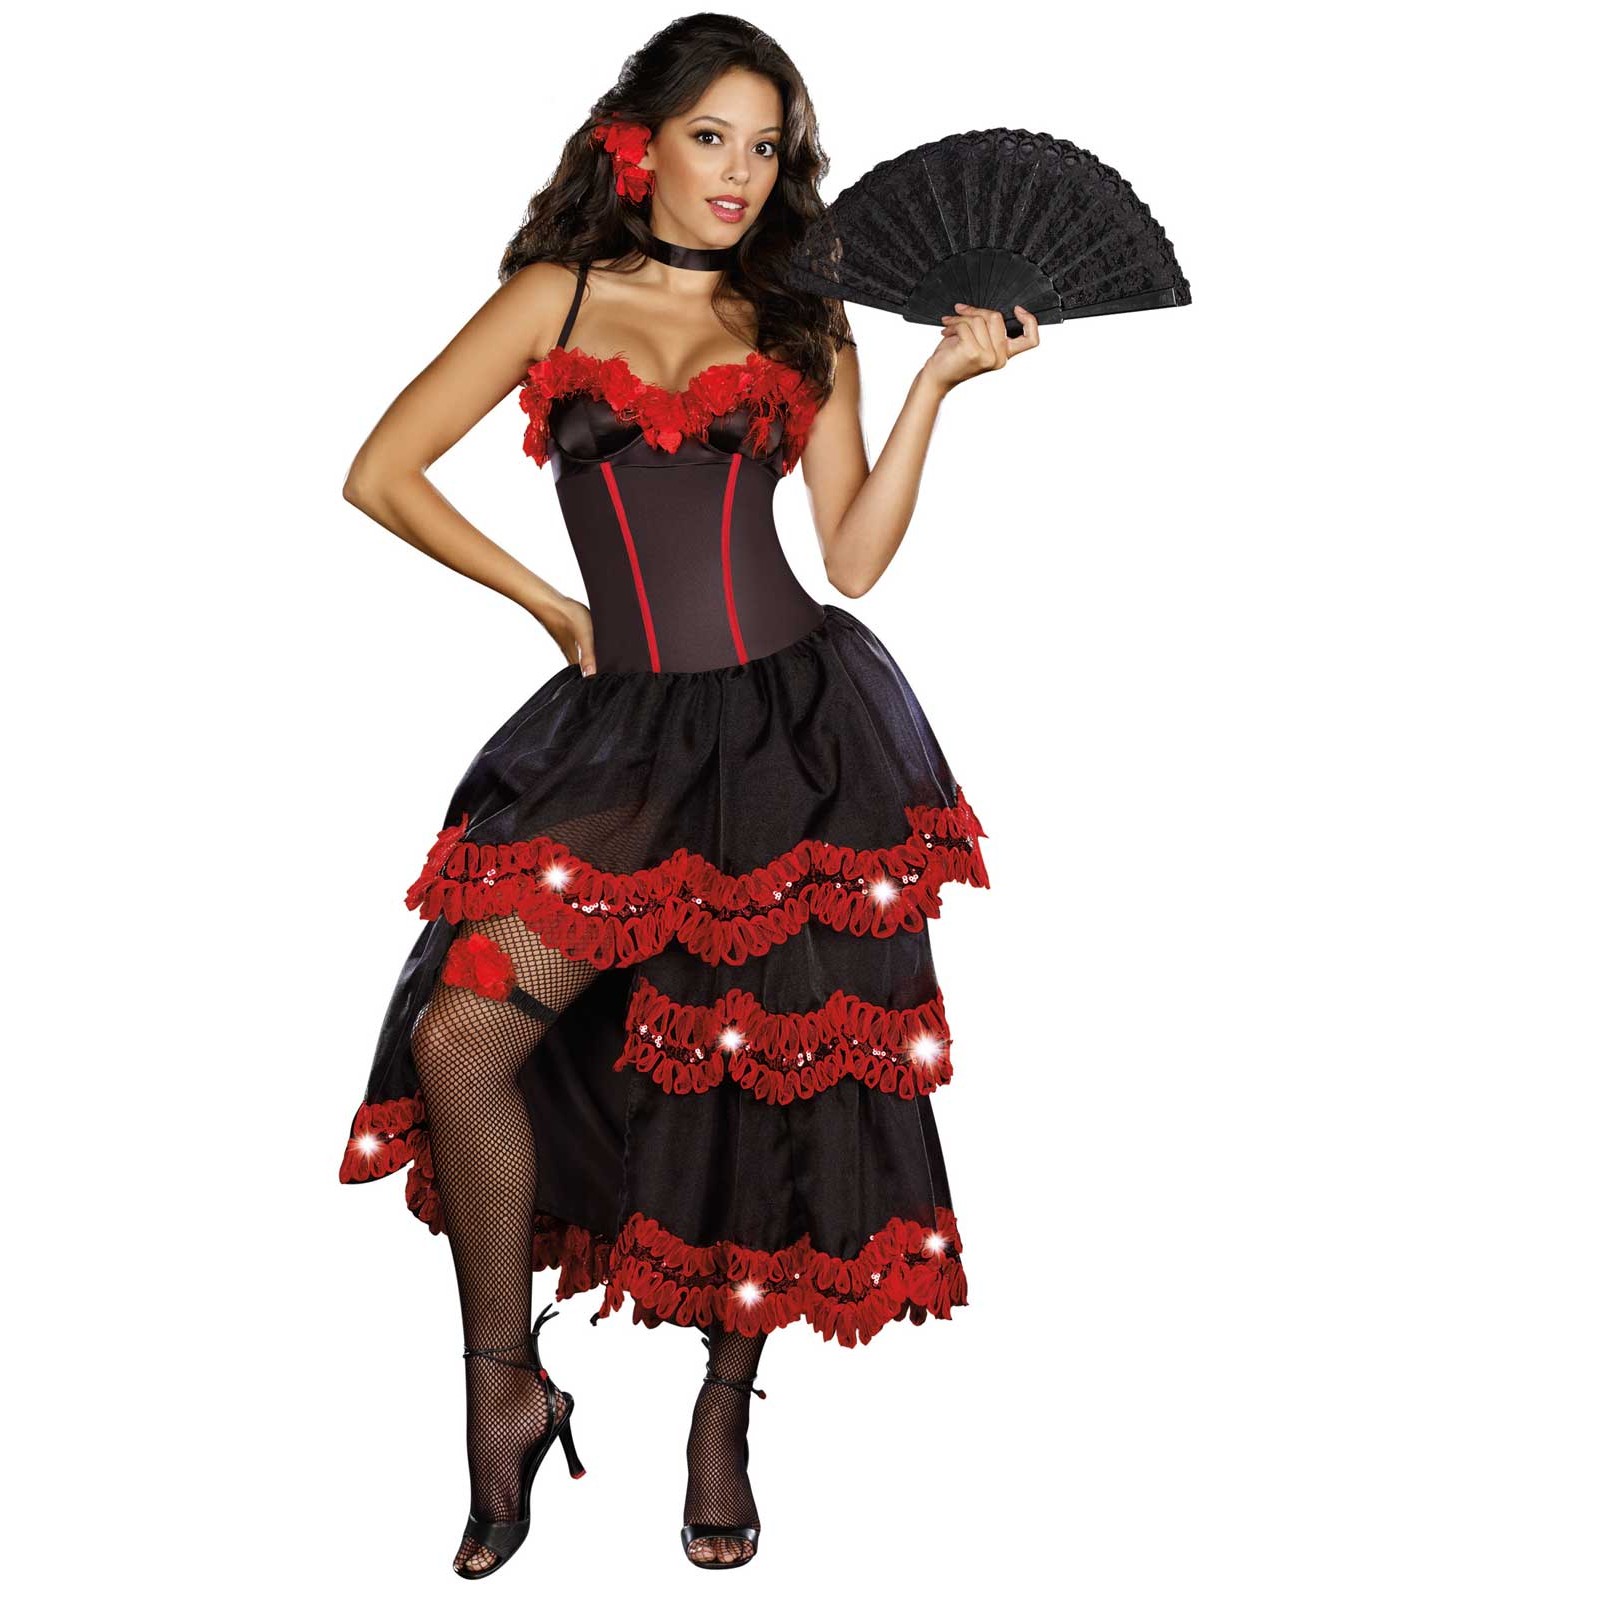 Spanish Seduction Adult Costume